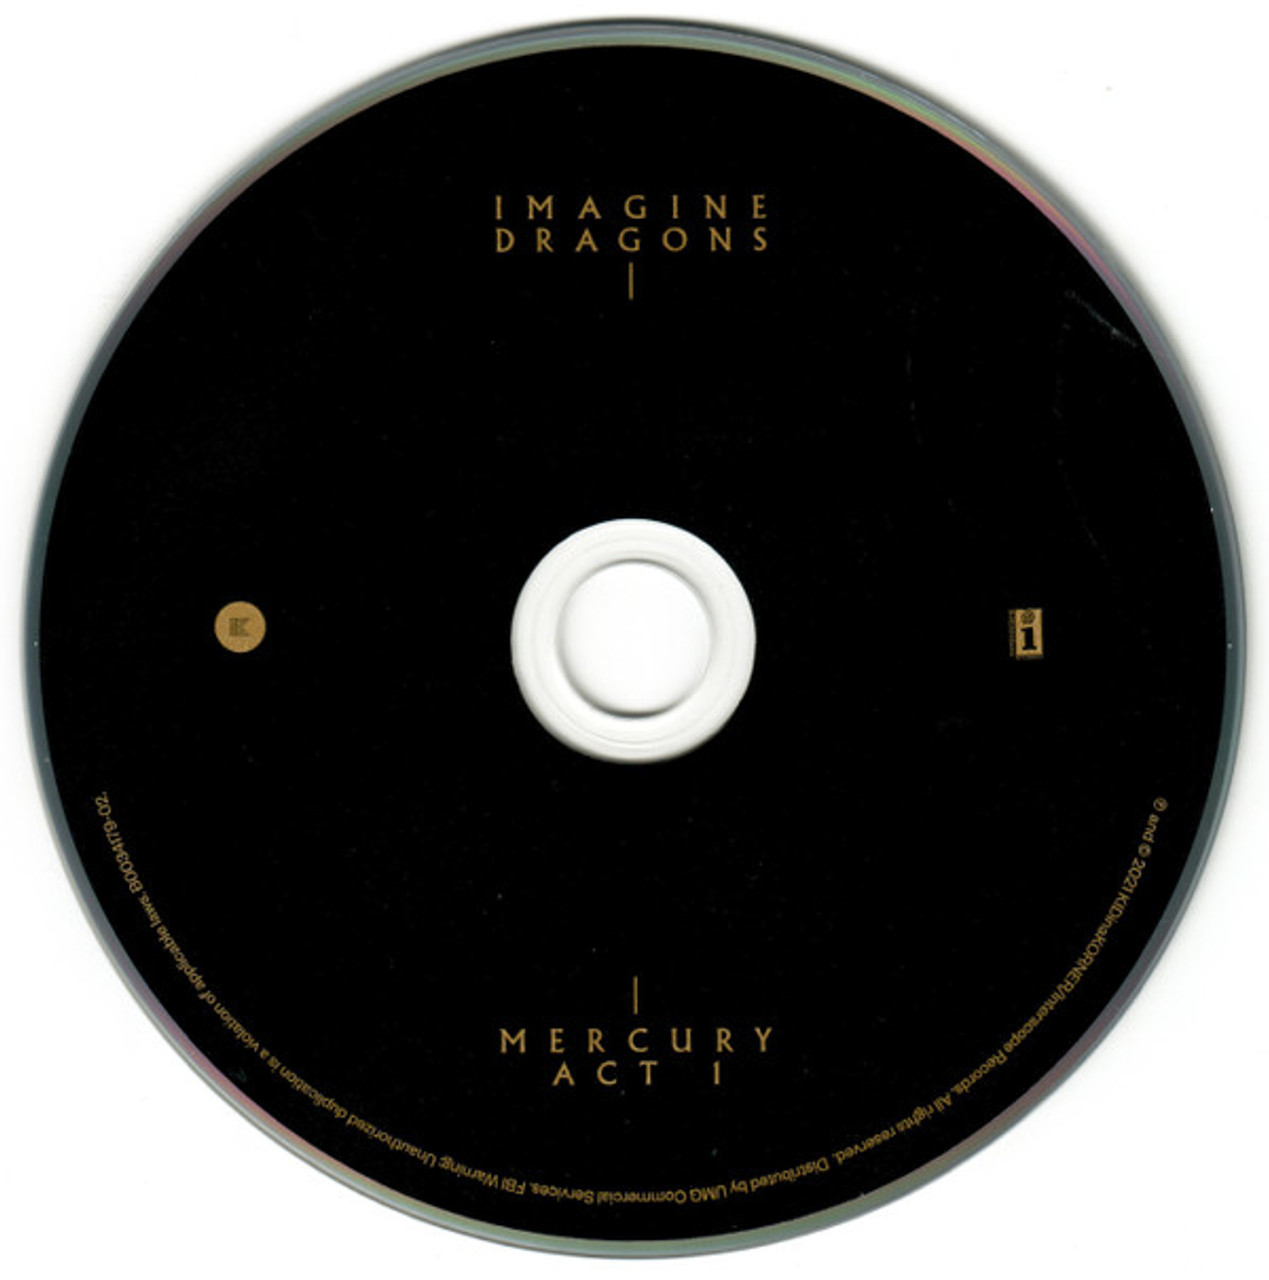 Mercury - Act 1 - Imagine Dragons (#602438385485) - Omega Music